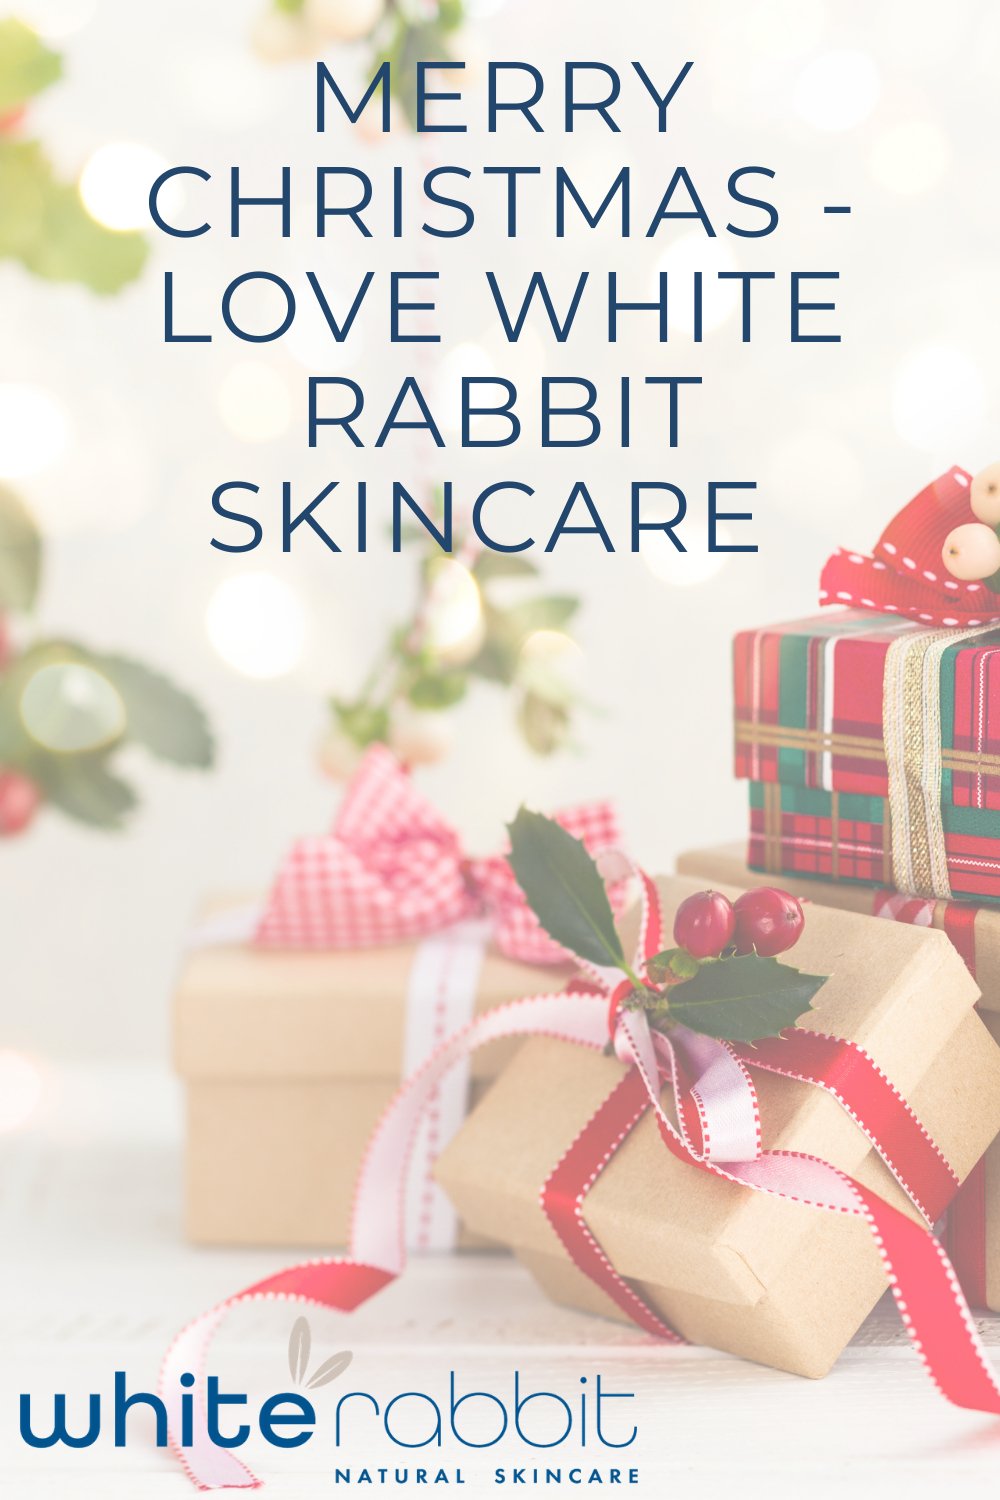 Merry Christmas love White Rabbit Skincare - White Rabbit Skin Care